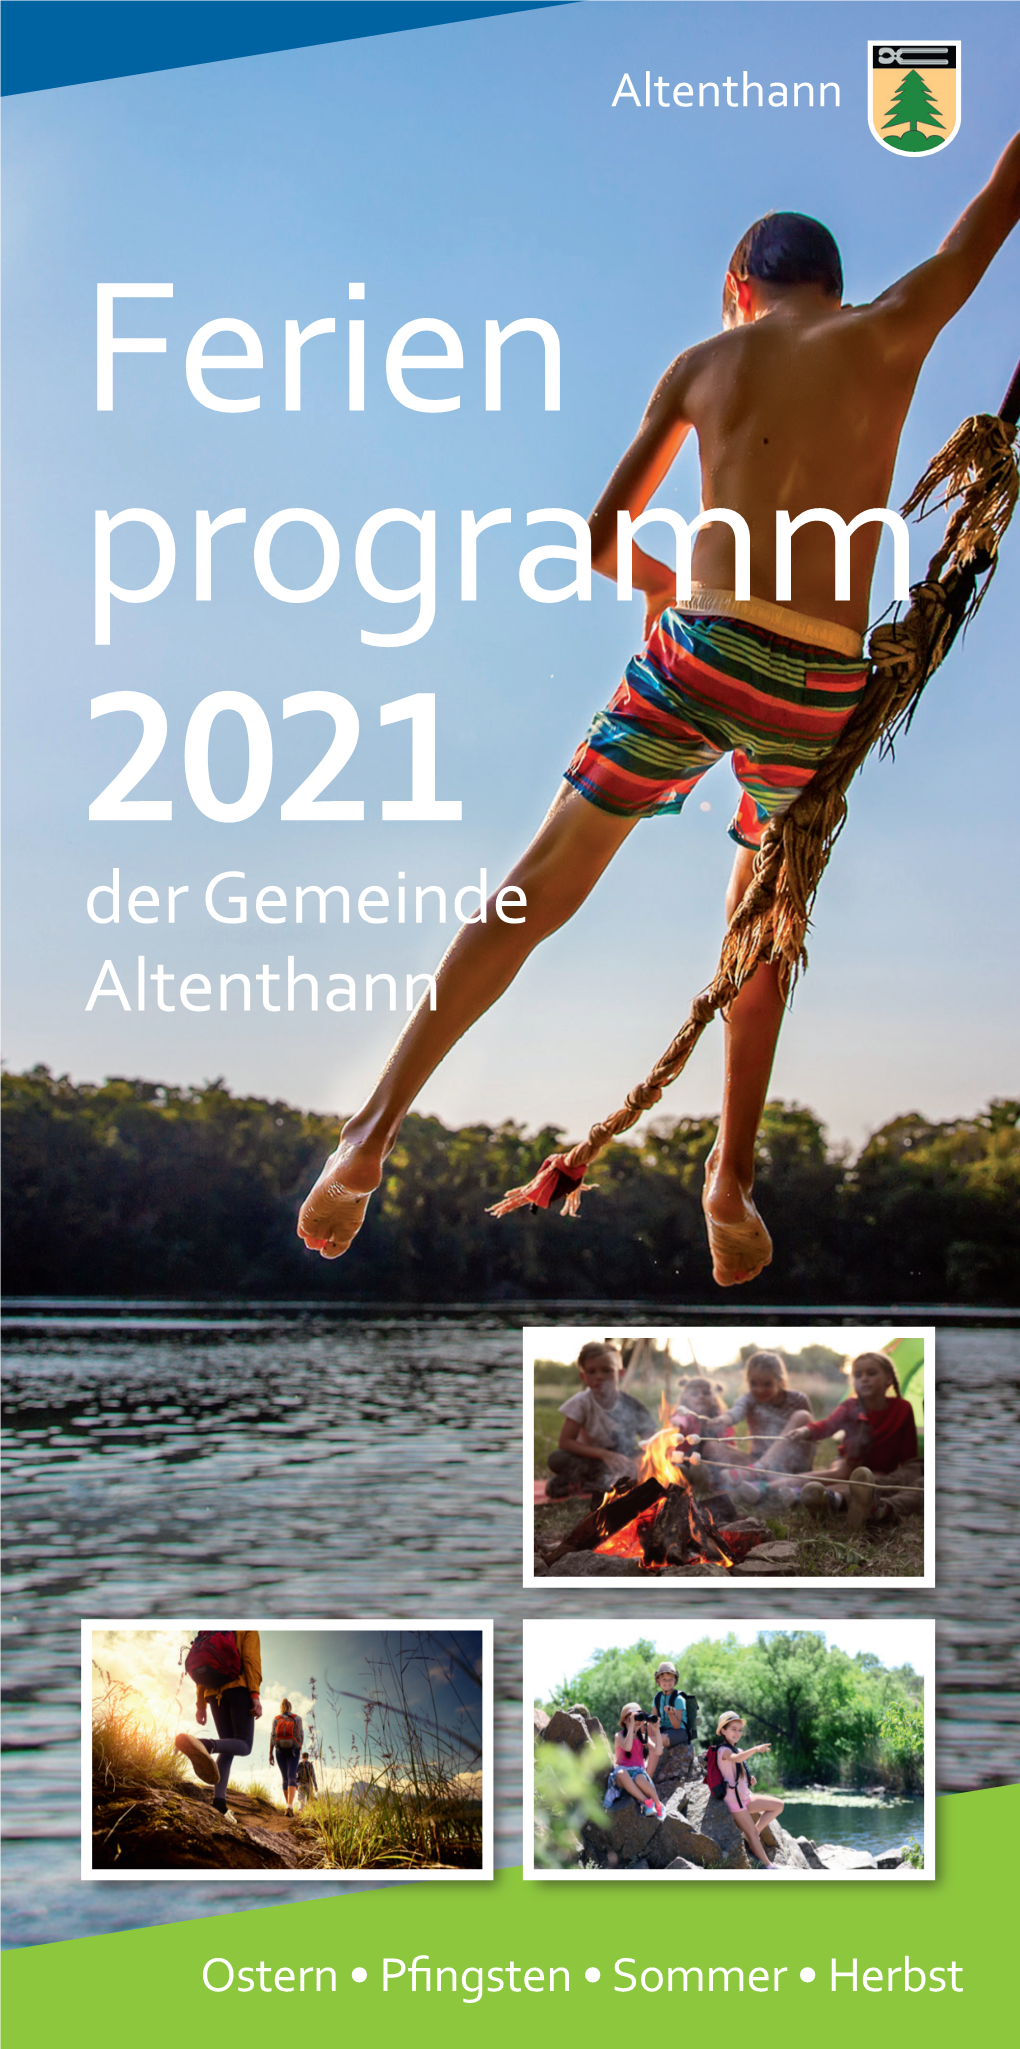 Ferien Programm Ferien Programm 2021